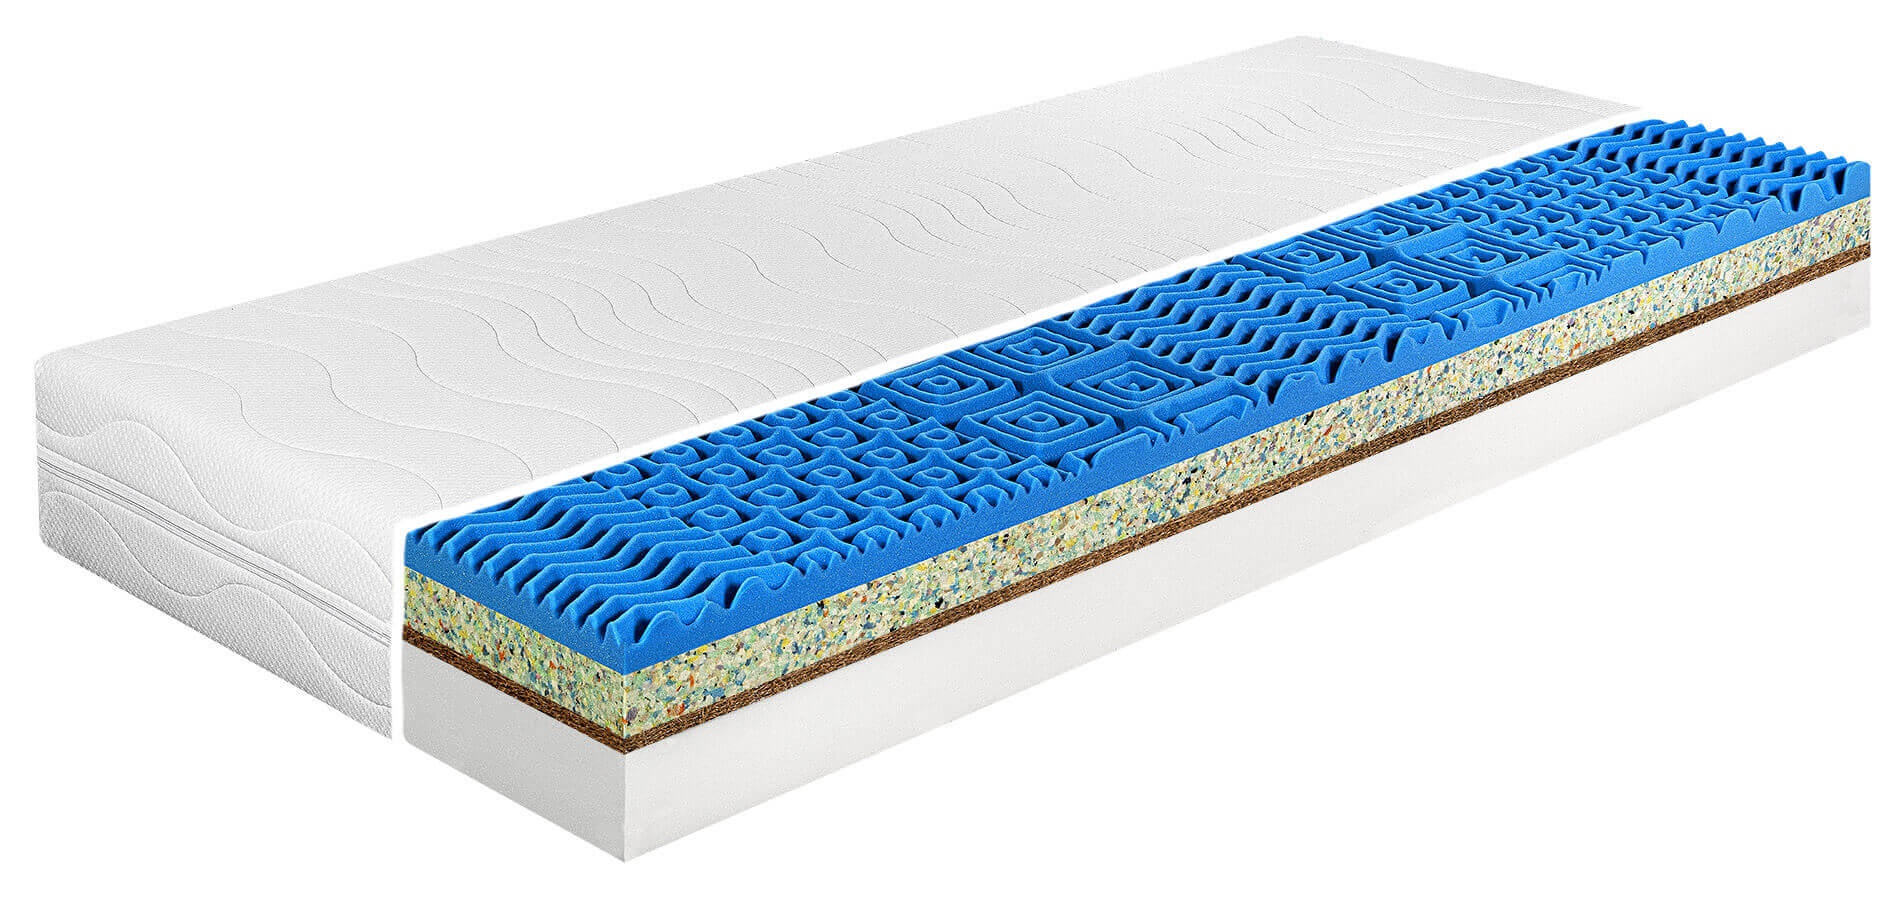 Sendvičová matrace ZEUS PLUS, výška 22 cm Rozměr: 85 x 195 cm, Materiál: chloe aktiv